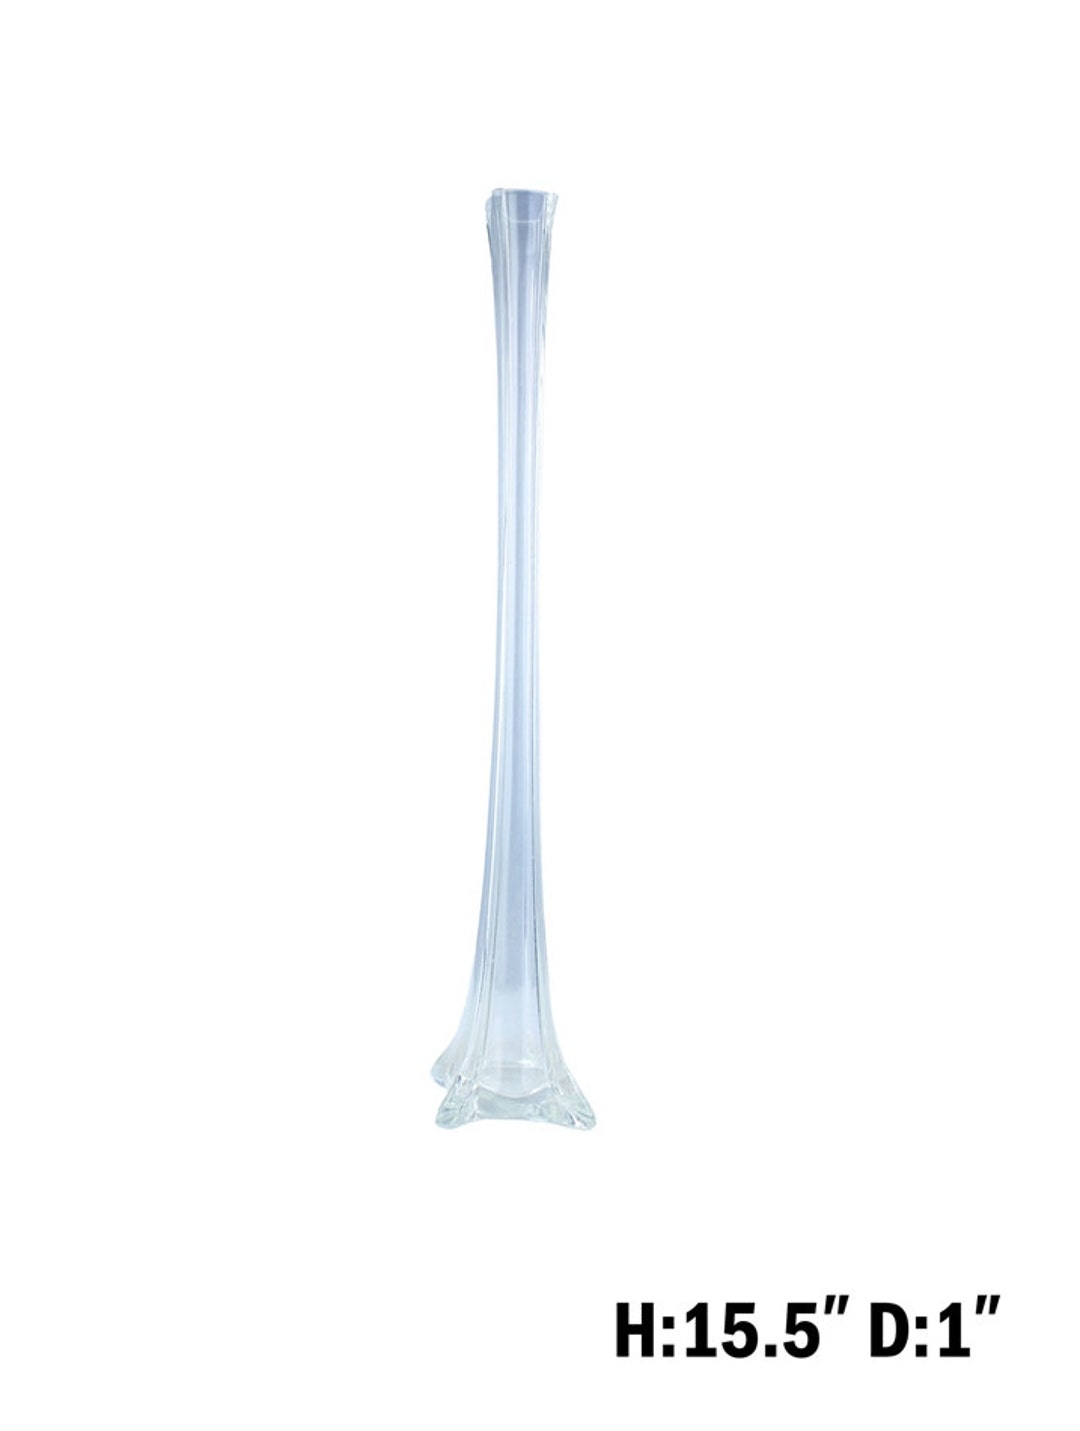 Inweder Tall Glass Vases for Centrepieces - 50cm Eiffel Tower Vase floor  standing Skinny Vase Long Thin